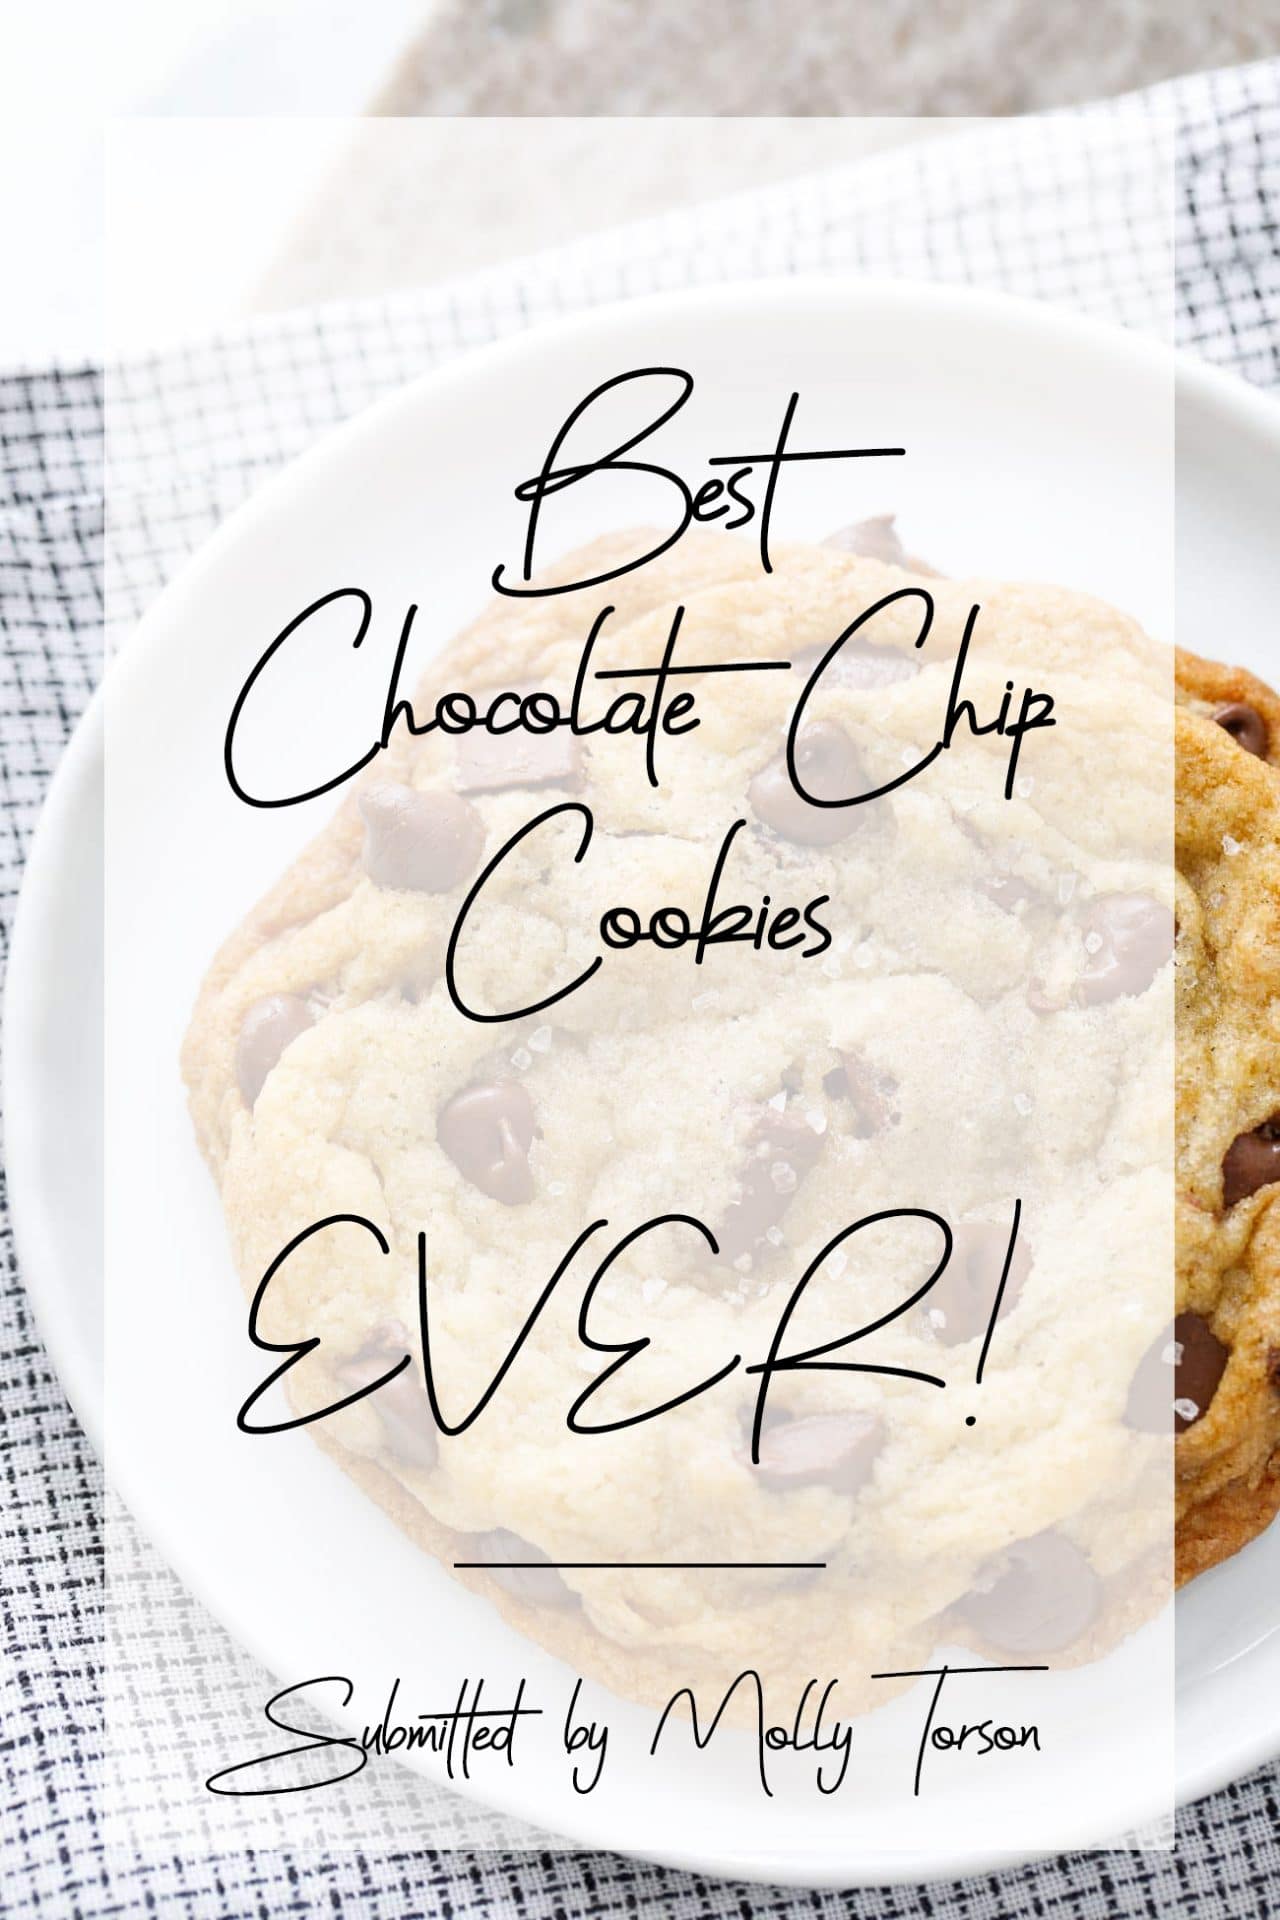 best-chocolate-chip-cookies-1-2 copy